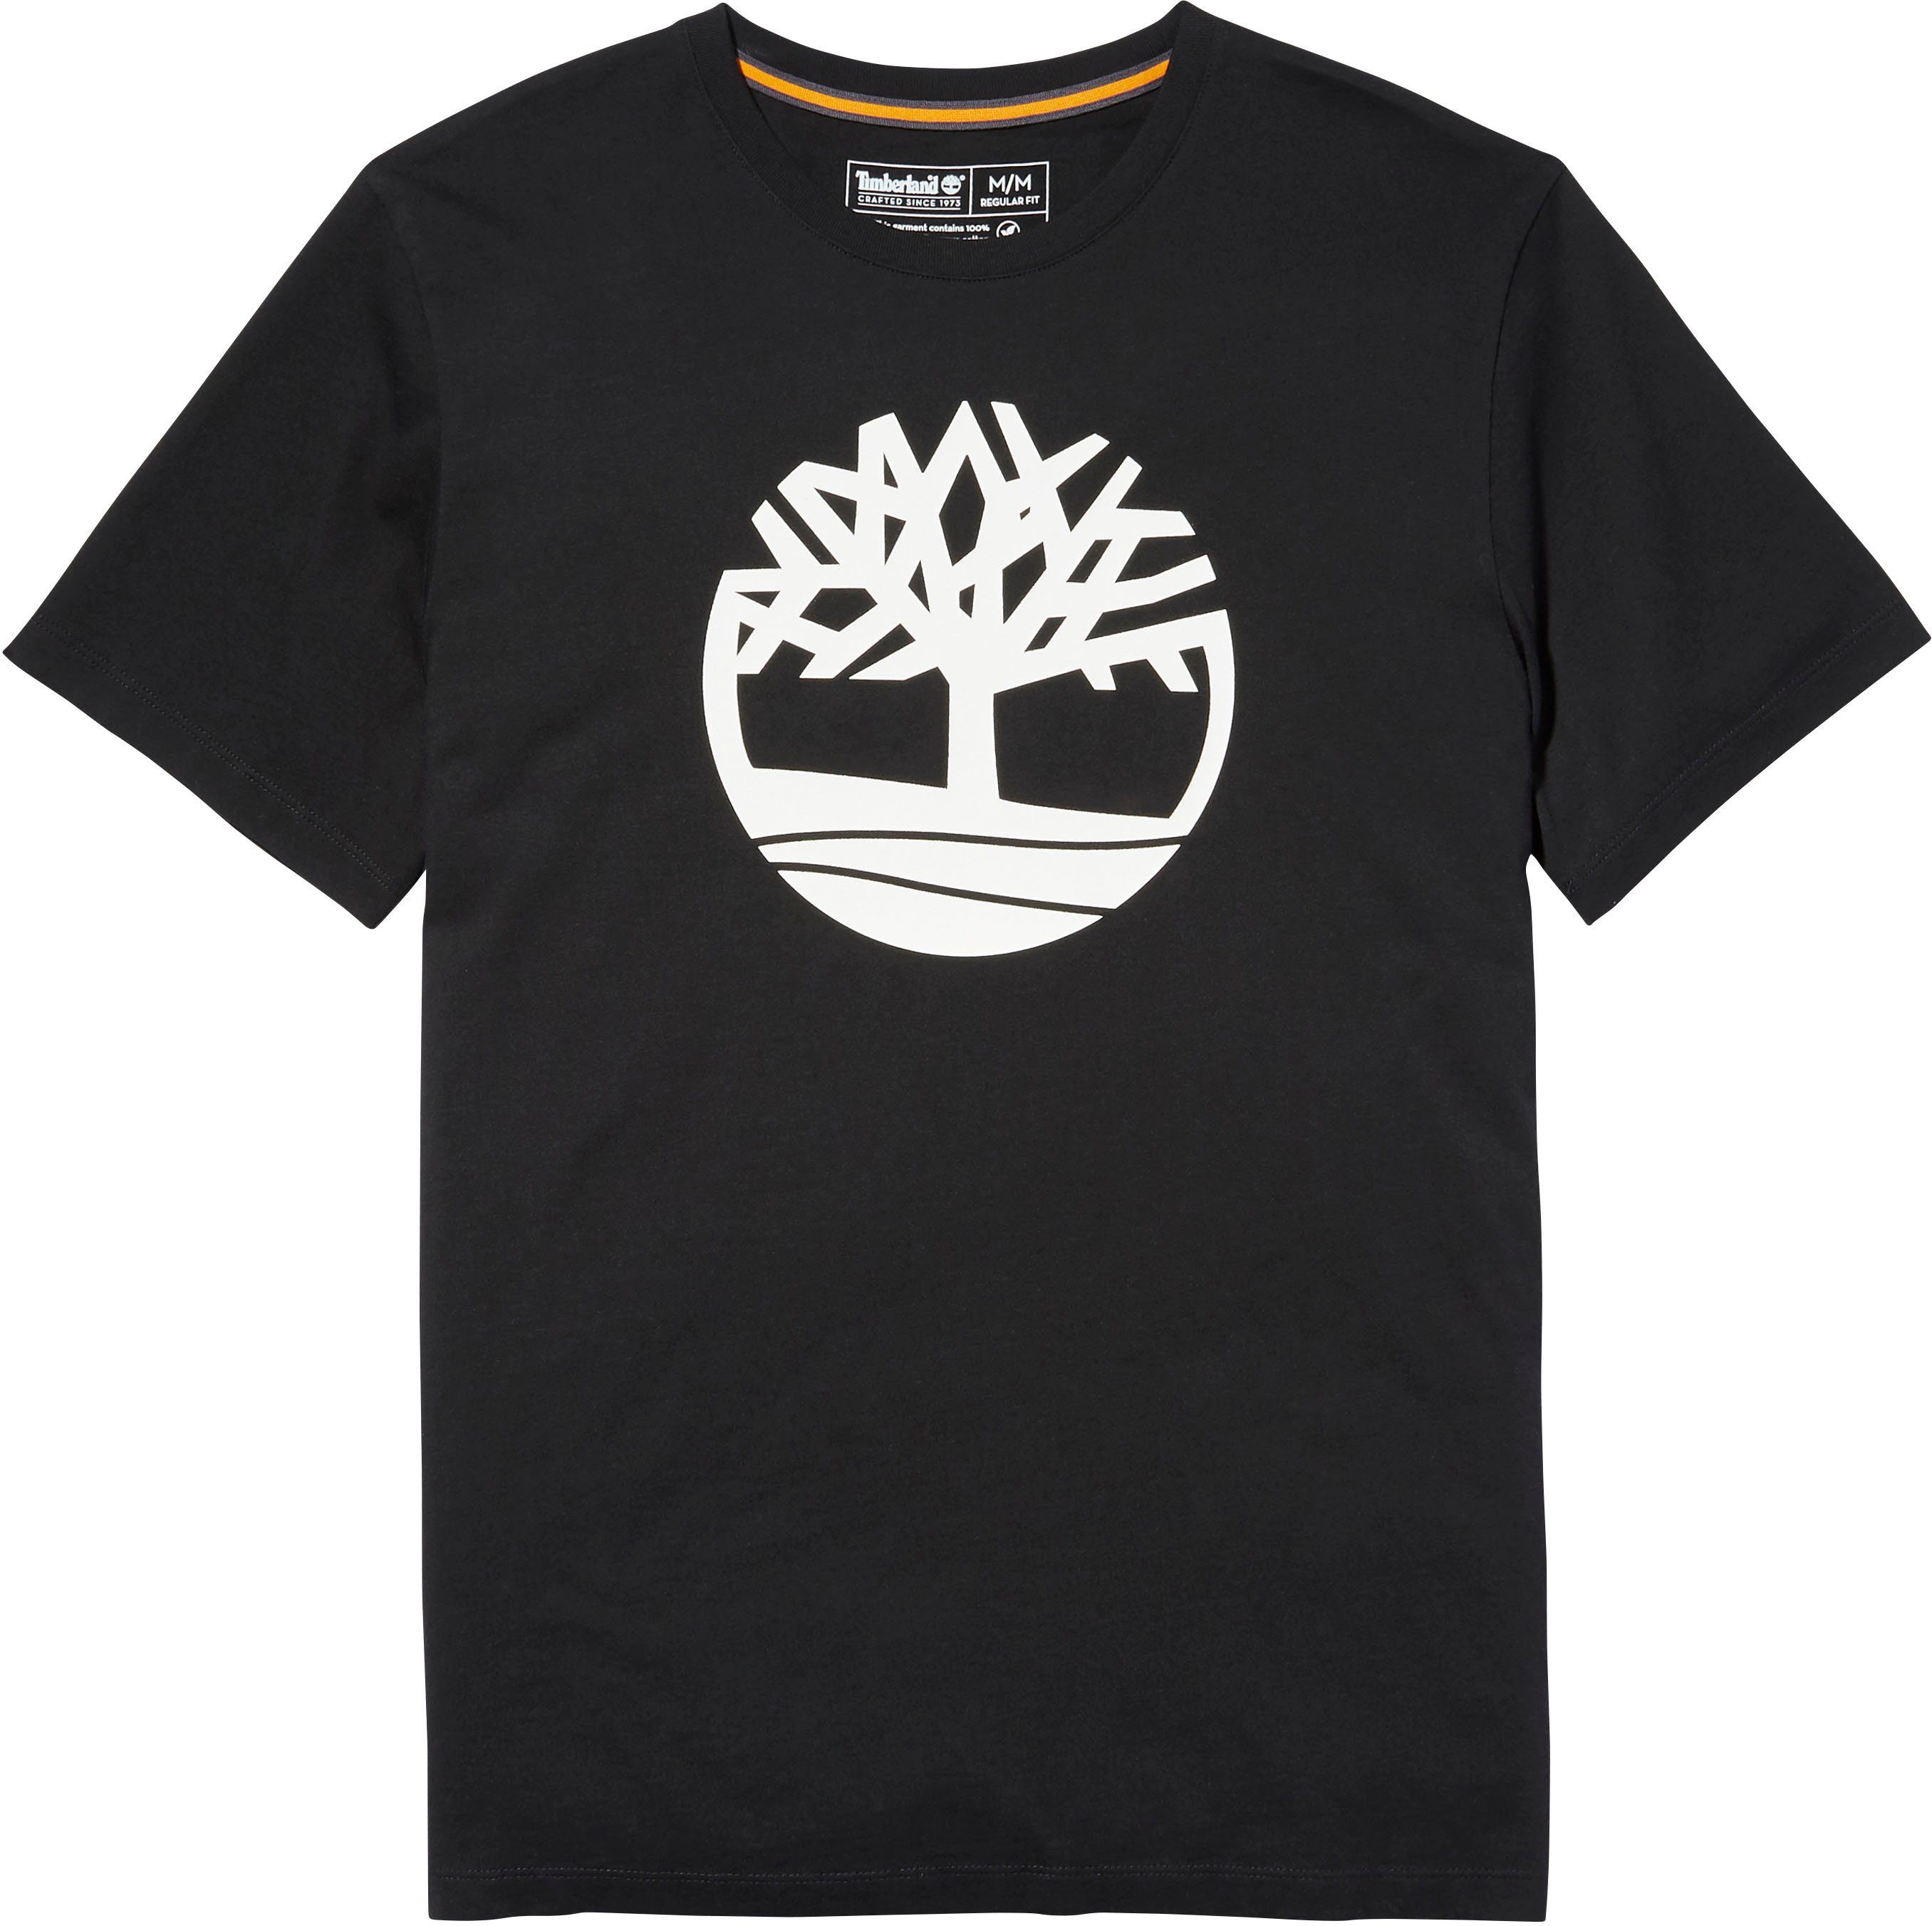 Tree River schwarz Kennebec Timberland T-Shirt